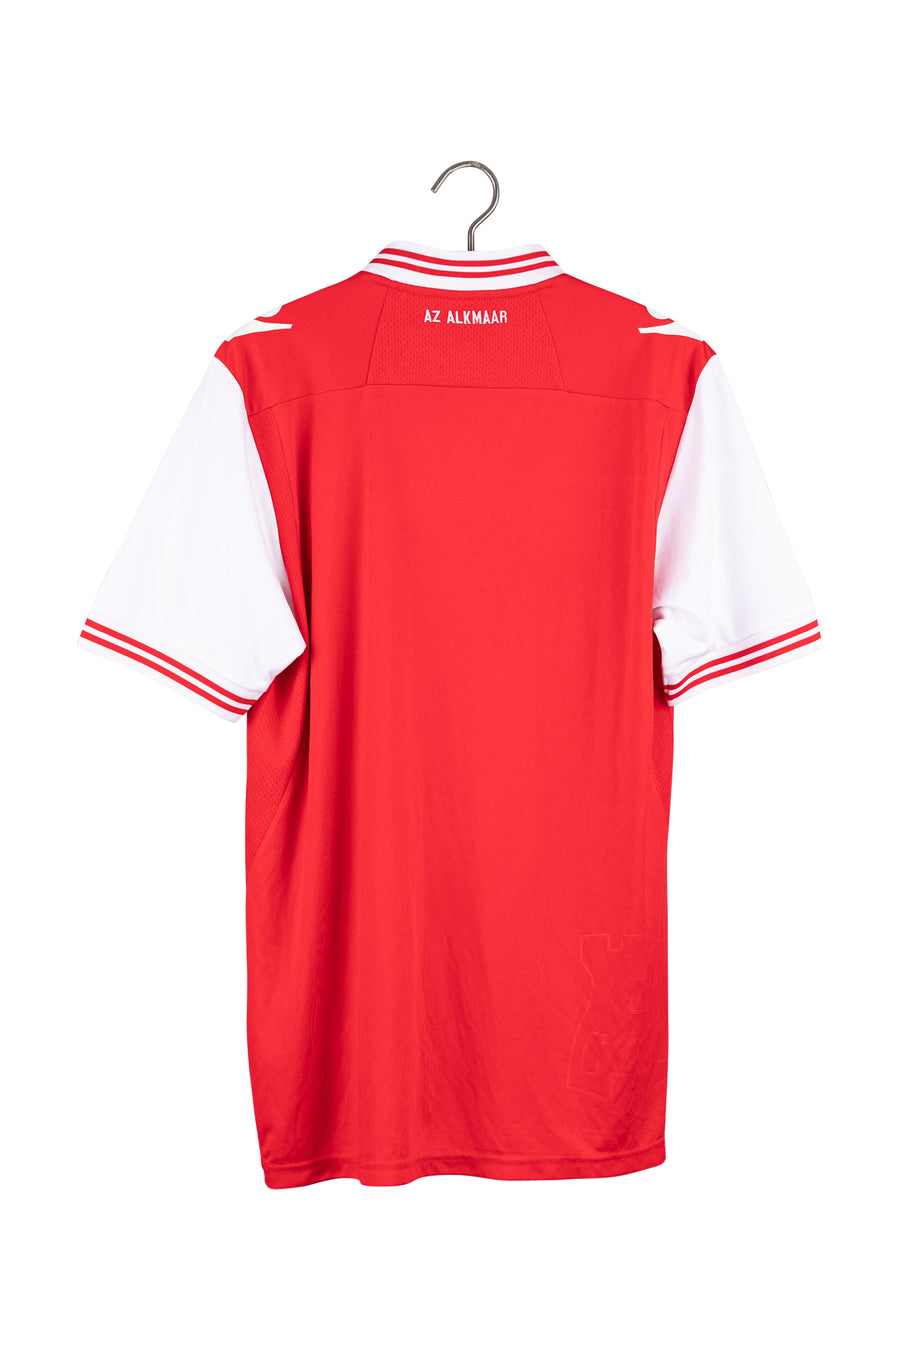 AZ Alkmaar 2013 - 2014 Home Football Shirt